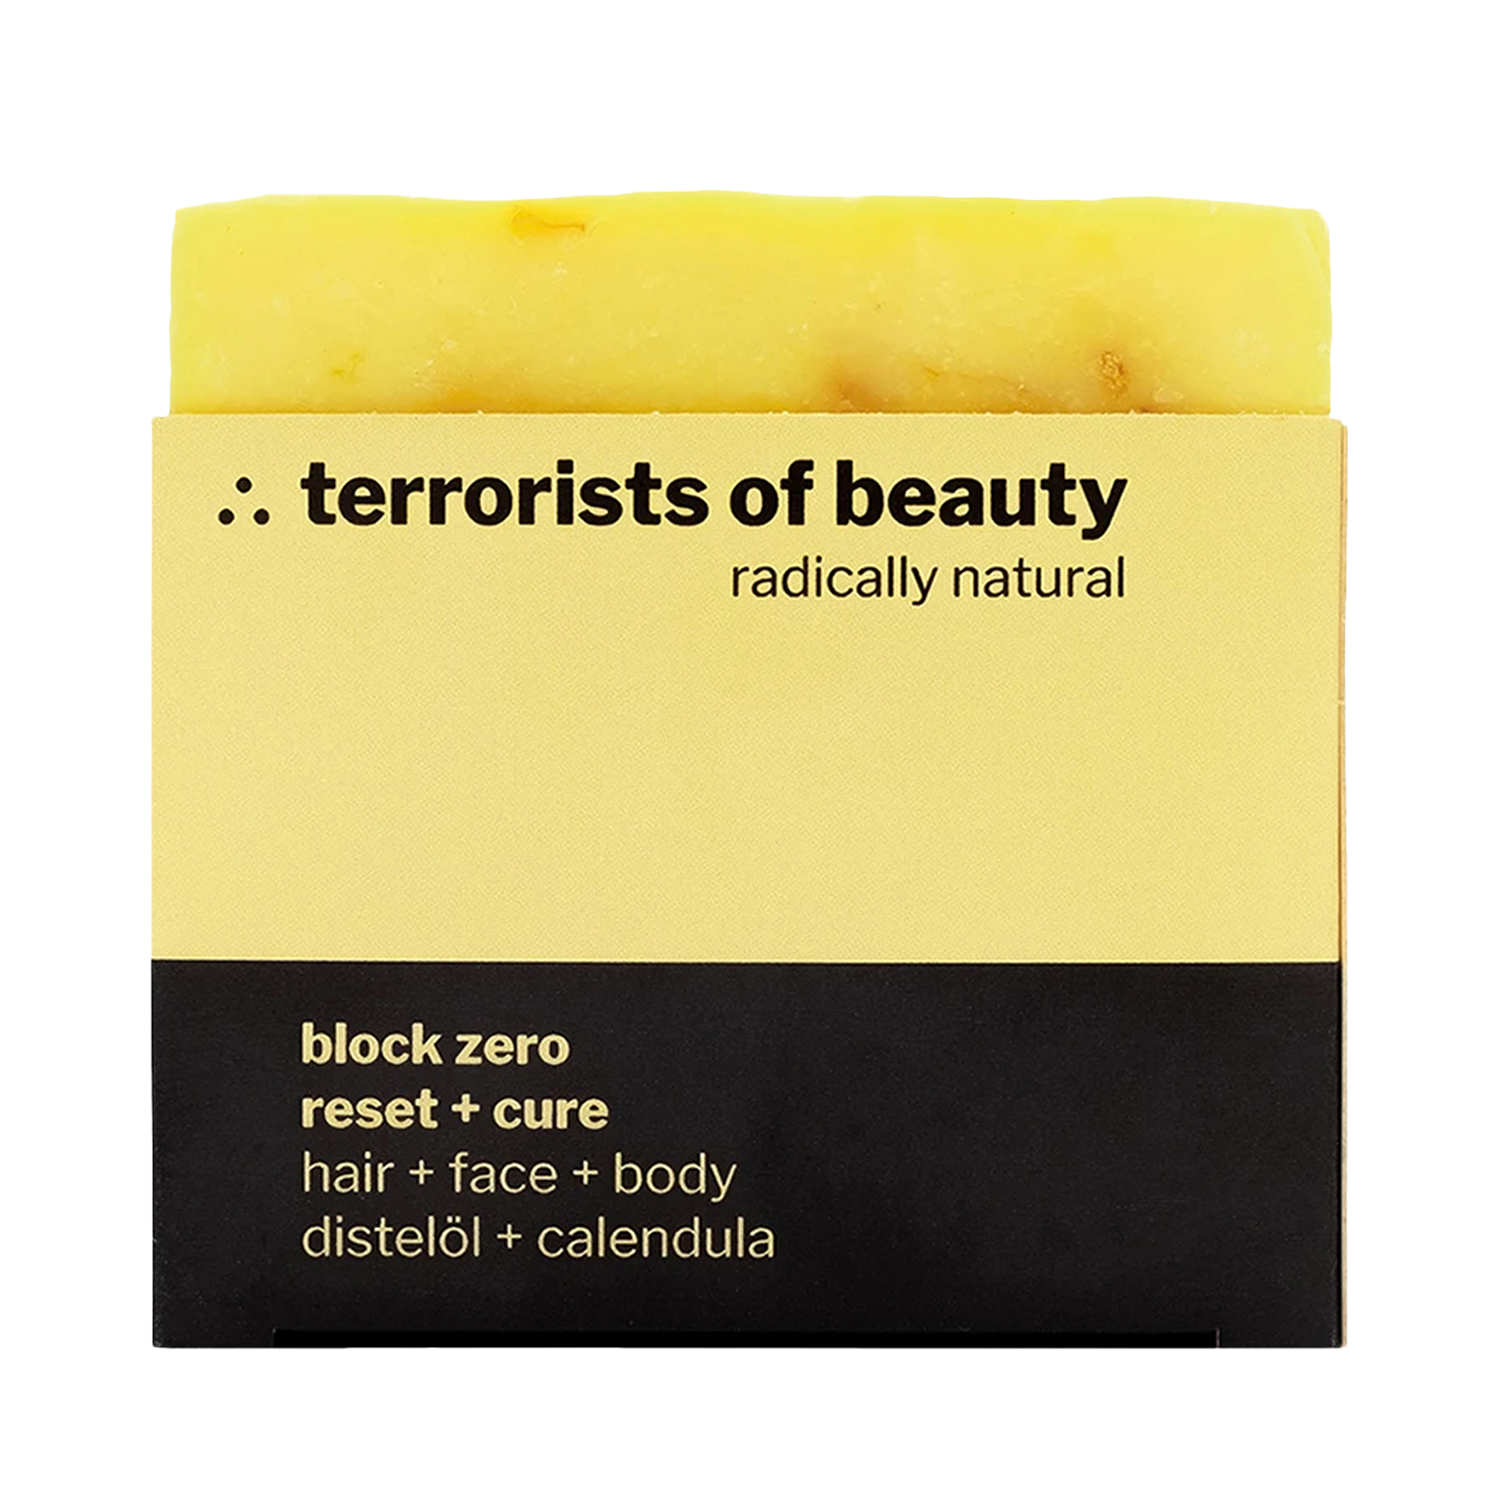 terrorists of beauty - block zero - reset + cure - Naturseife für Haare, Gesicht und Körper